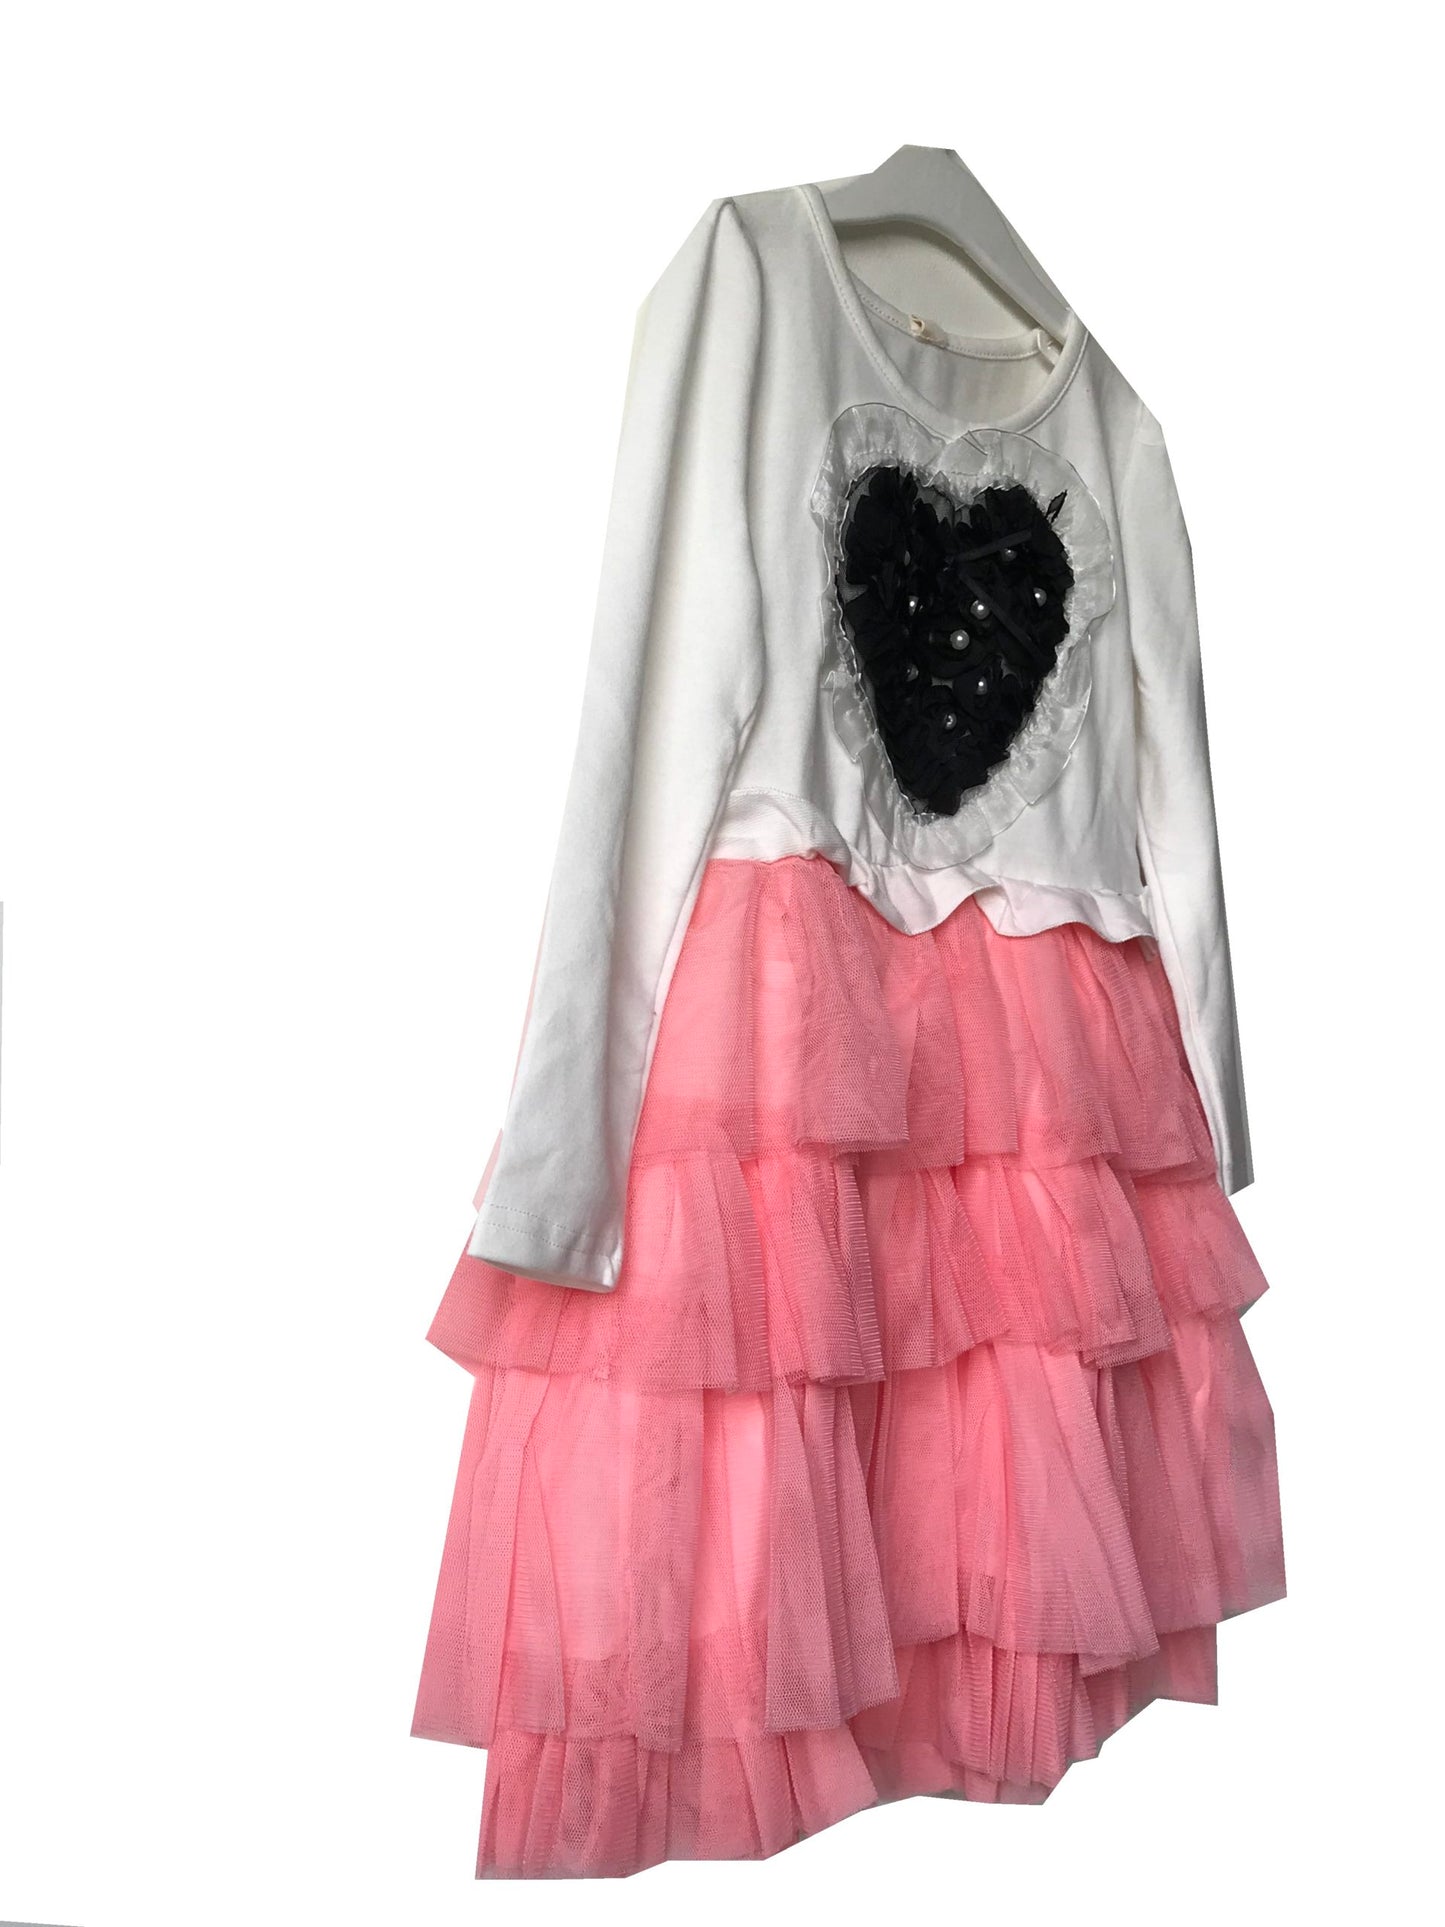 White Pink Dress Plaids Cotton Frills 4-5 Years